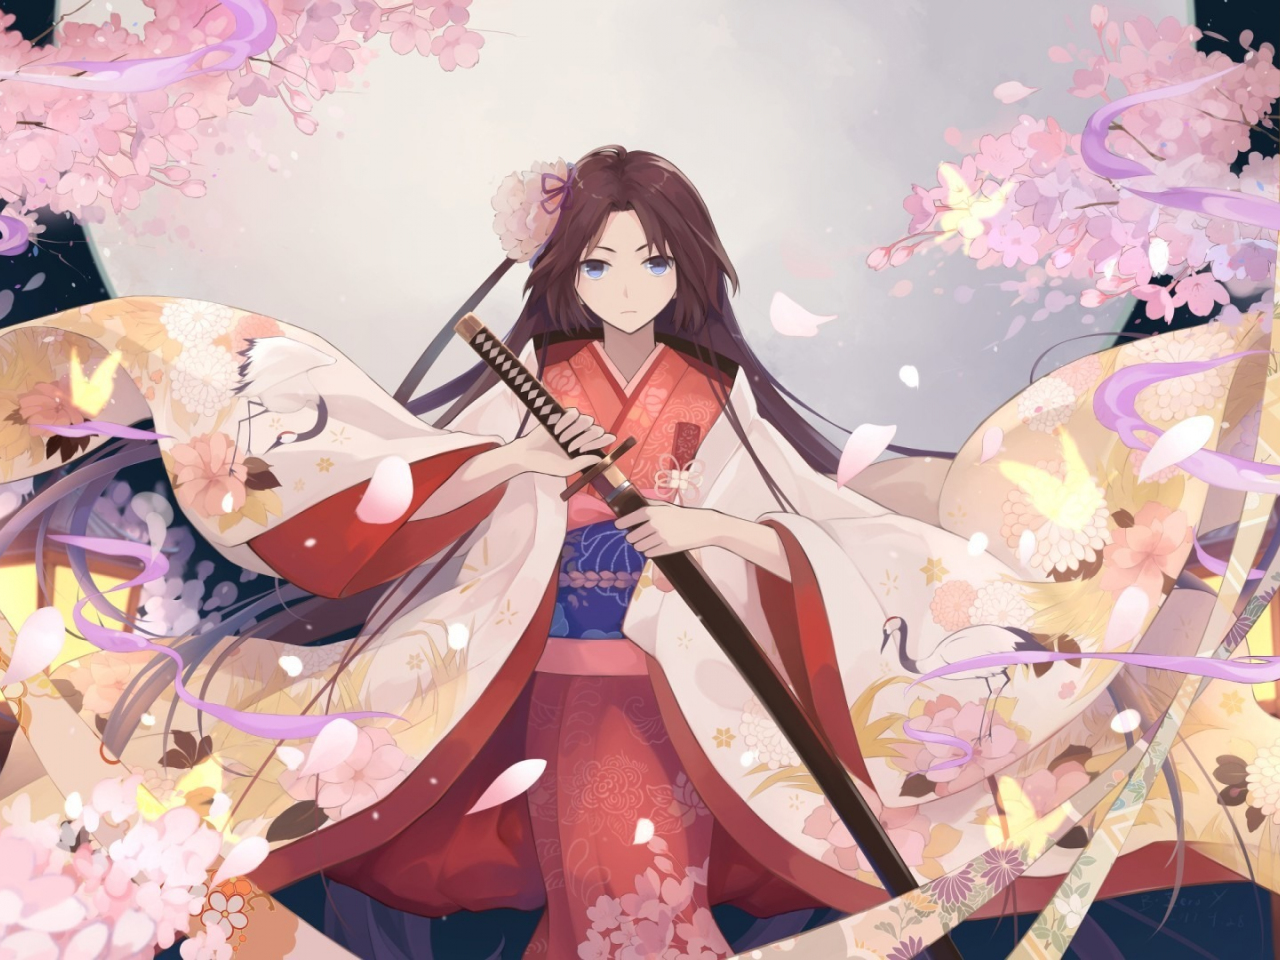 Download wallpaper 1280x960 shiki ryougi, type-moon, anime girl, blossom,  standard 4:3 fullscreen 1280x960 hd background, 1442